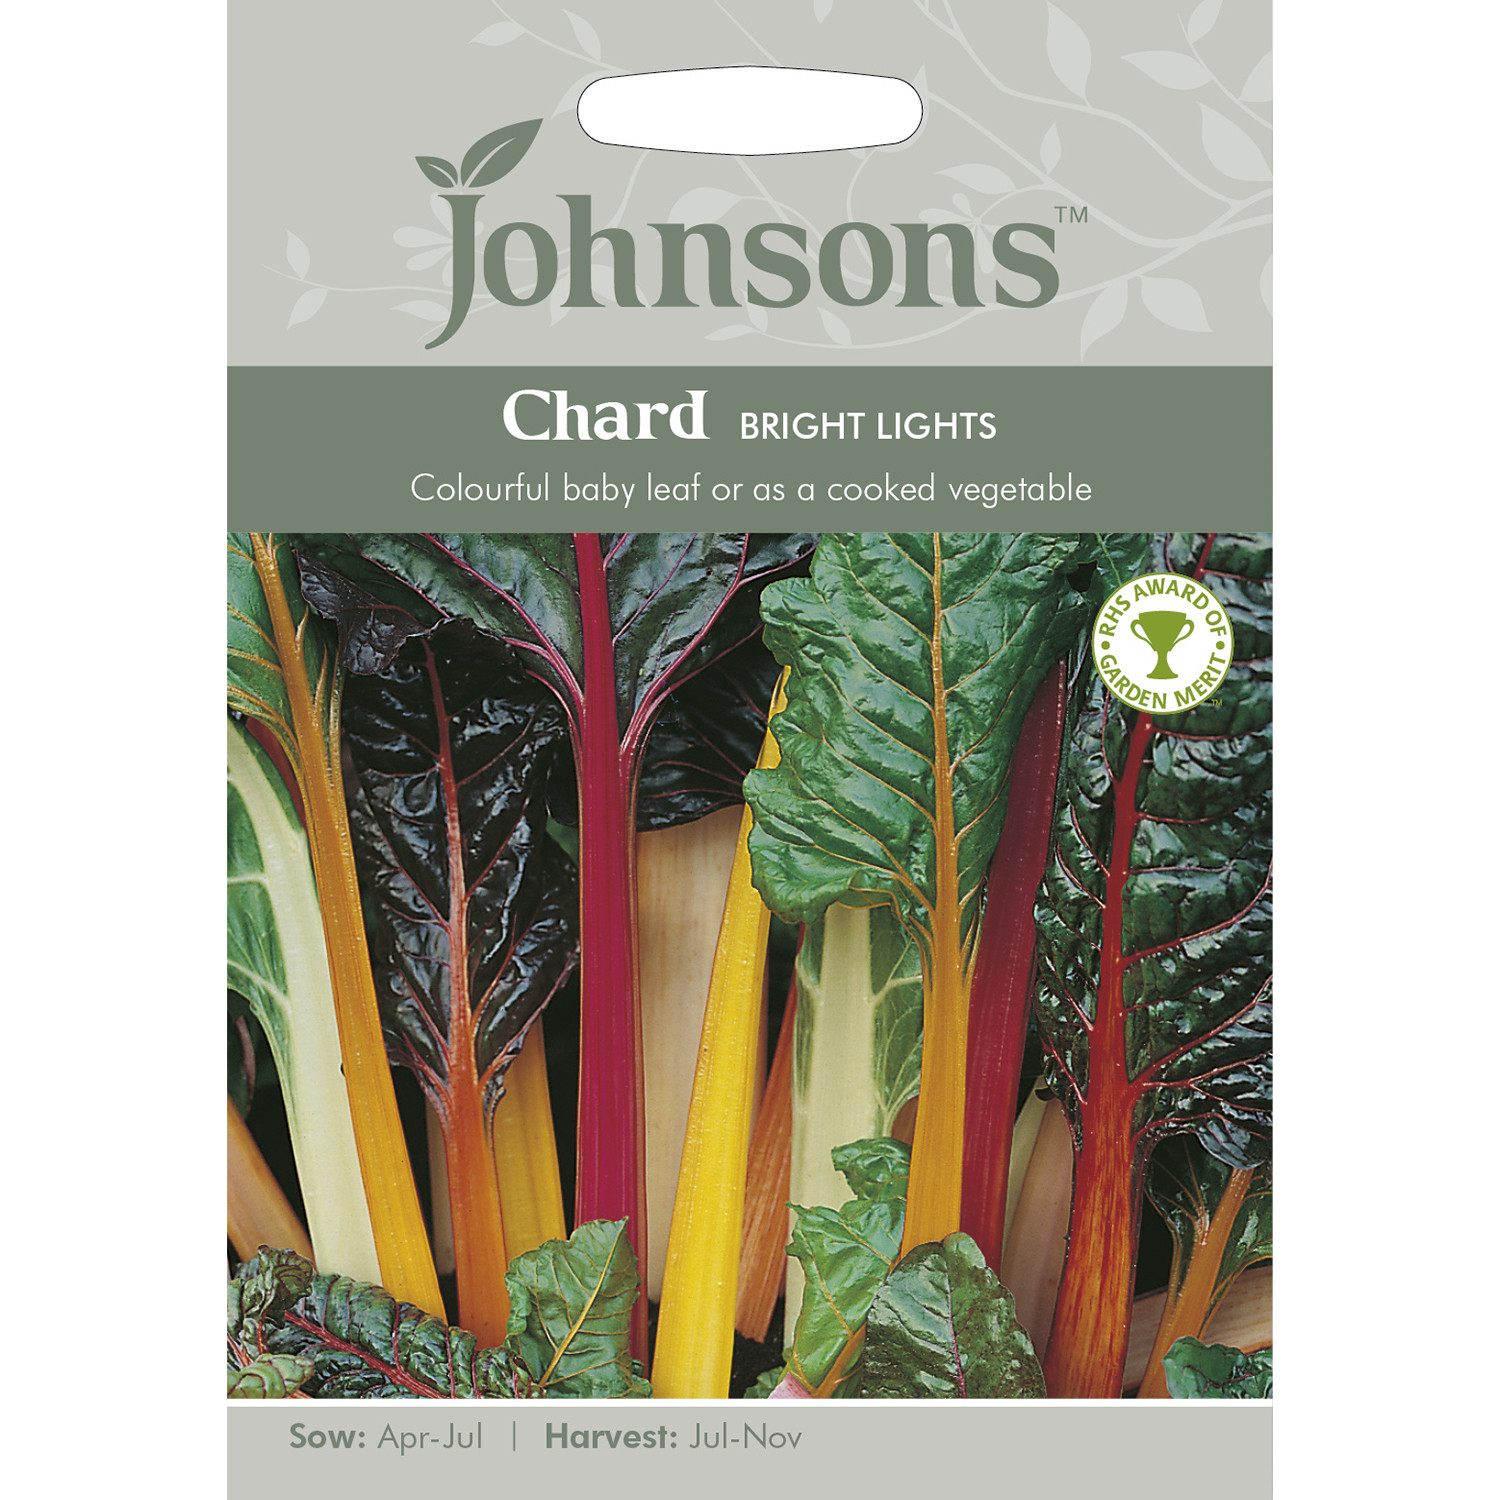 Johnsons Bright Lights Chard Seeds Image 2